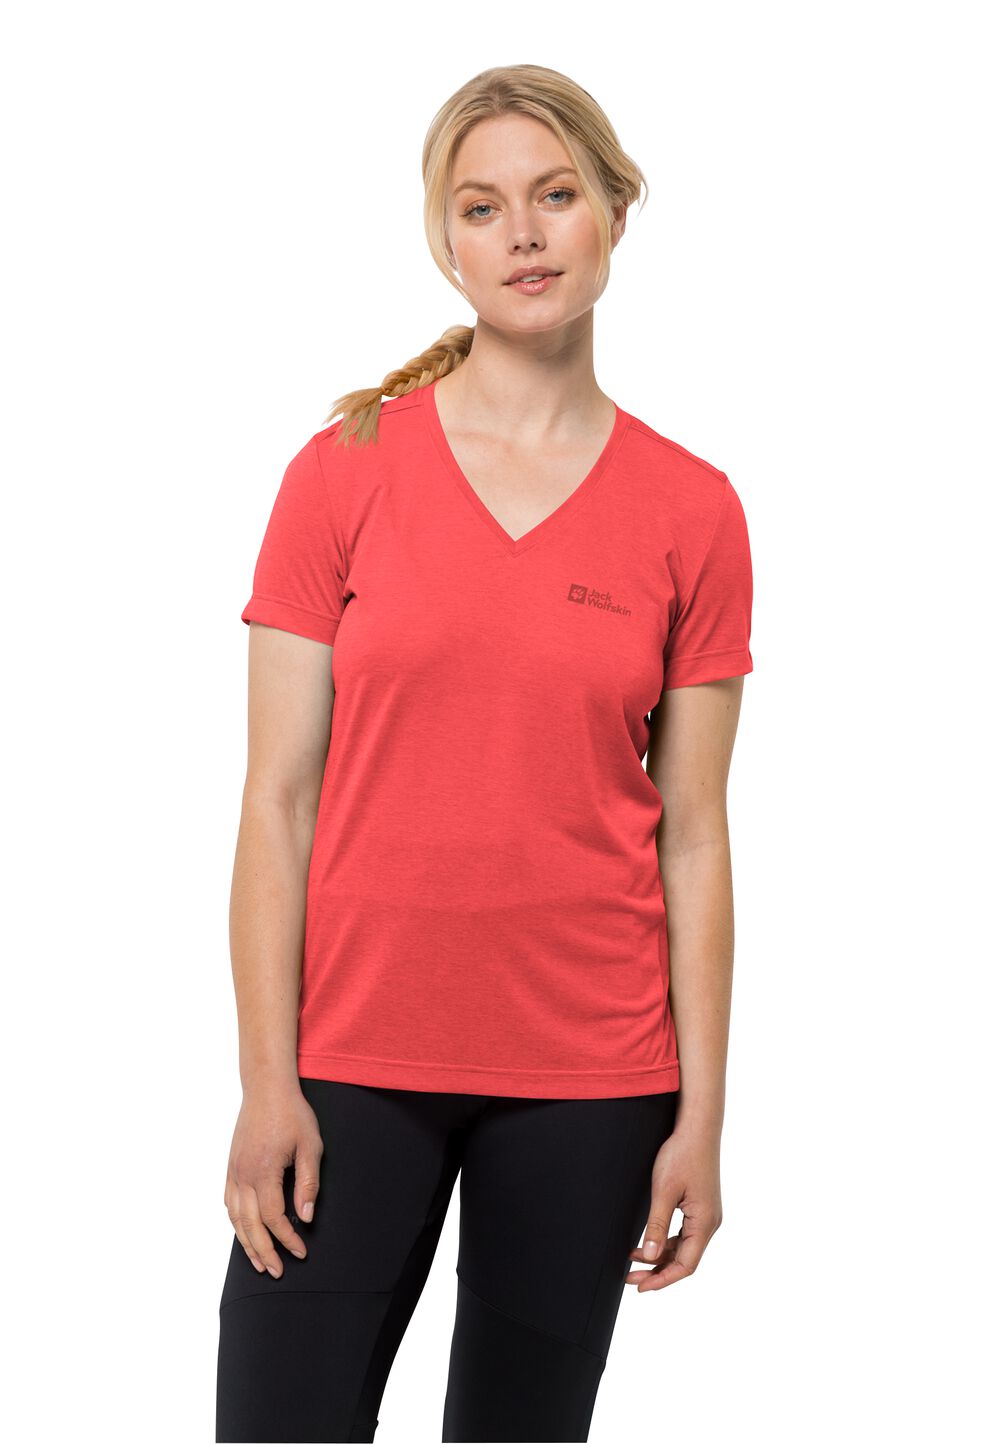 Jack Wolfskin Crosstrail T-Shirt Women Functioneel shirt Dames XS rood vibrant red